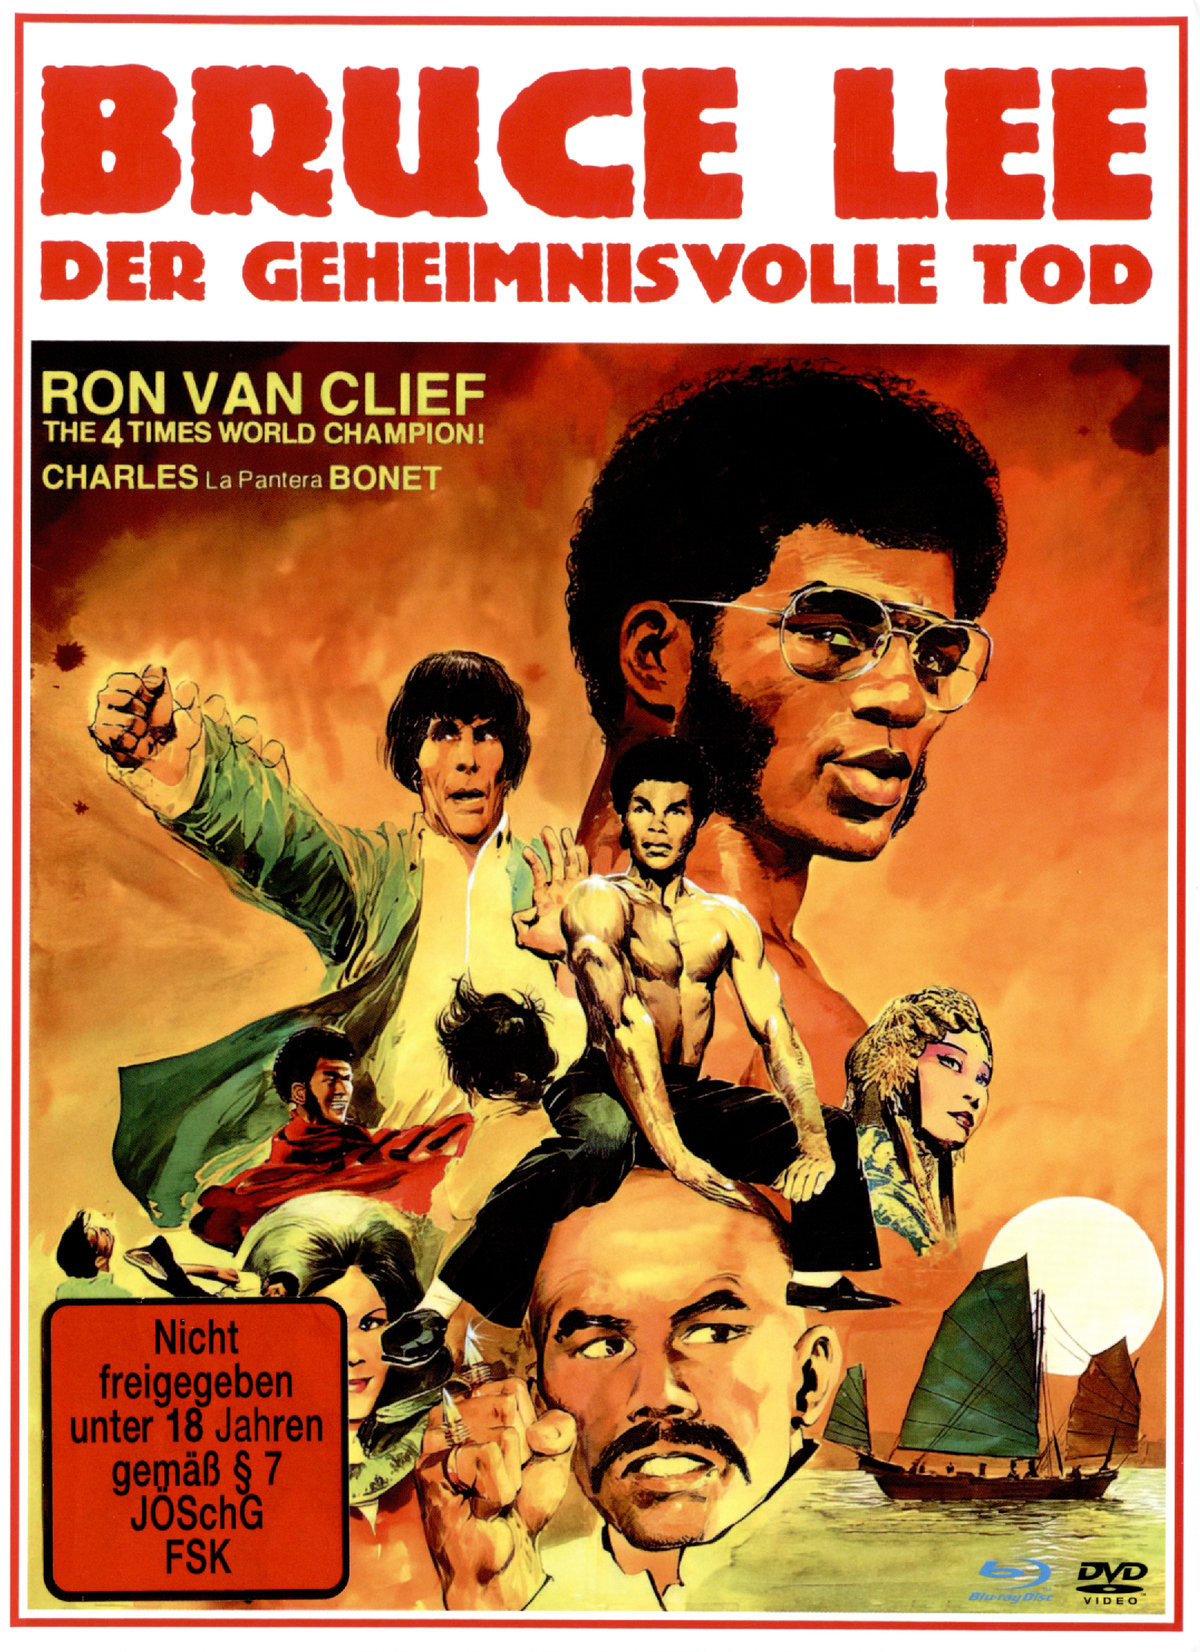 Bruce Lee - Der geheimnisvolle Tod - Uncut Mediabook Edition (DVD+blu-ray) (A)